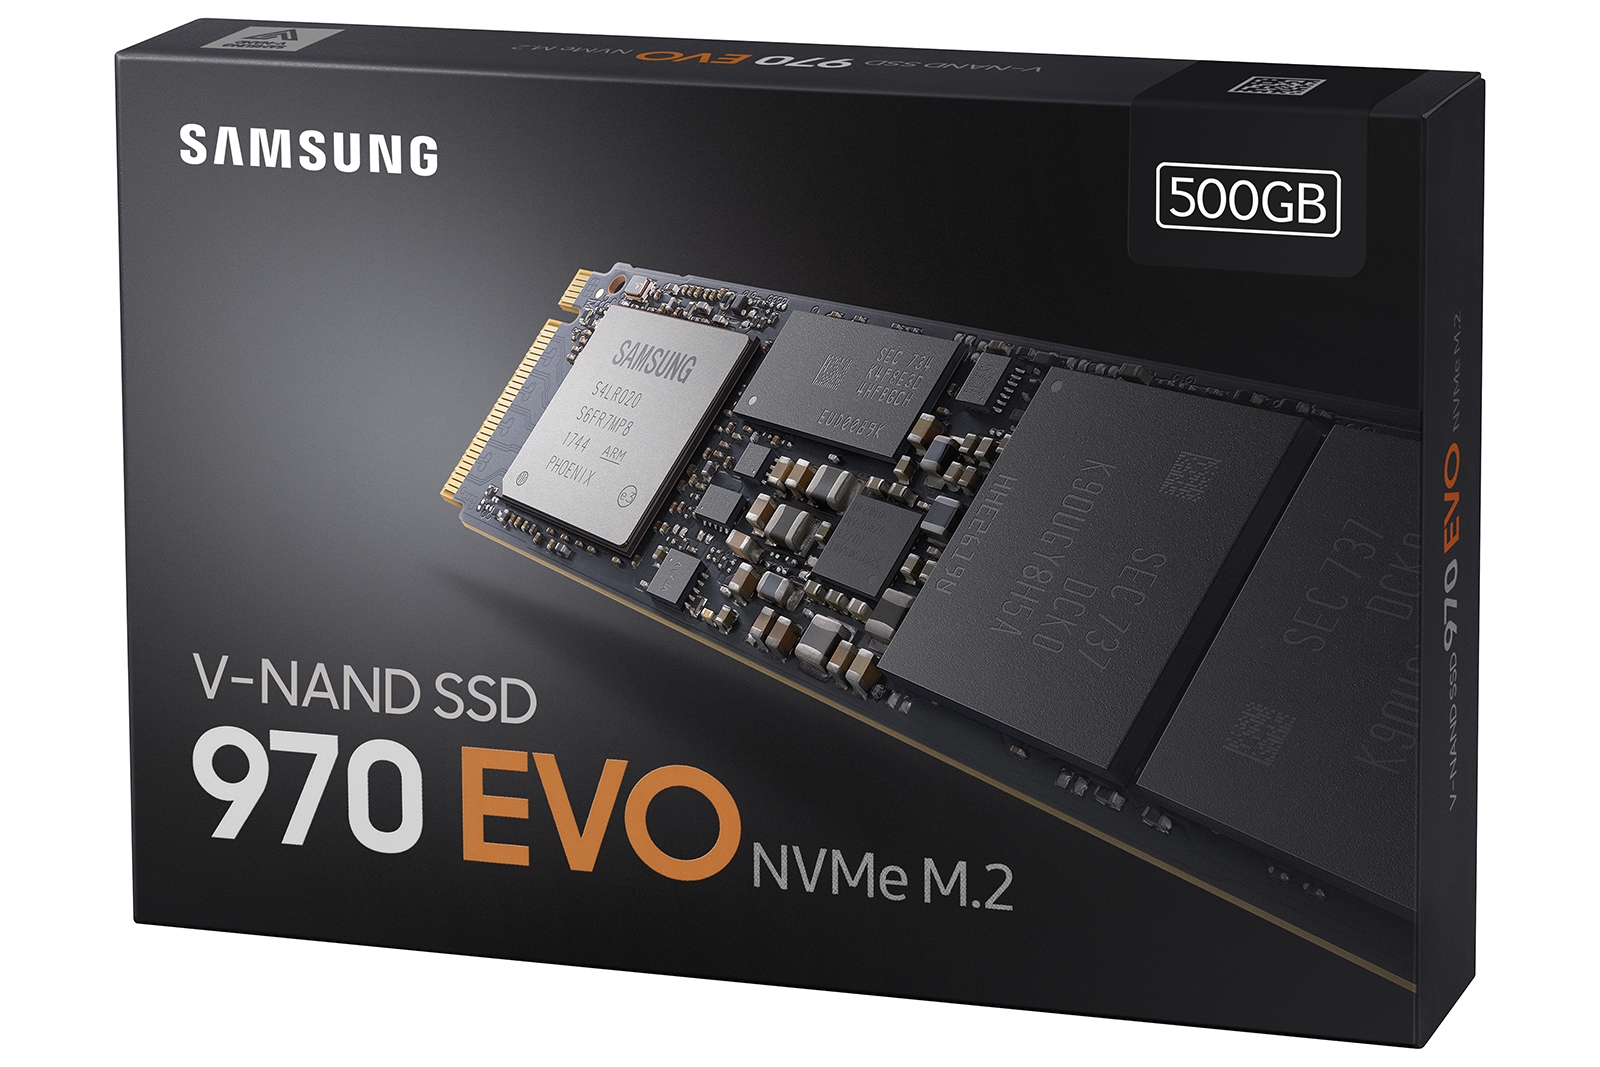 SSD 970 EVO NVMe® M.2 500GB Memory & Storage - MZ-V7E500BW ...